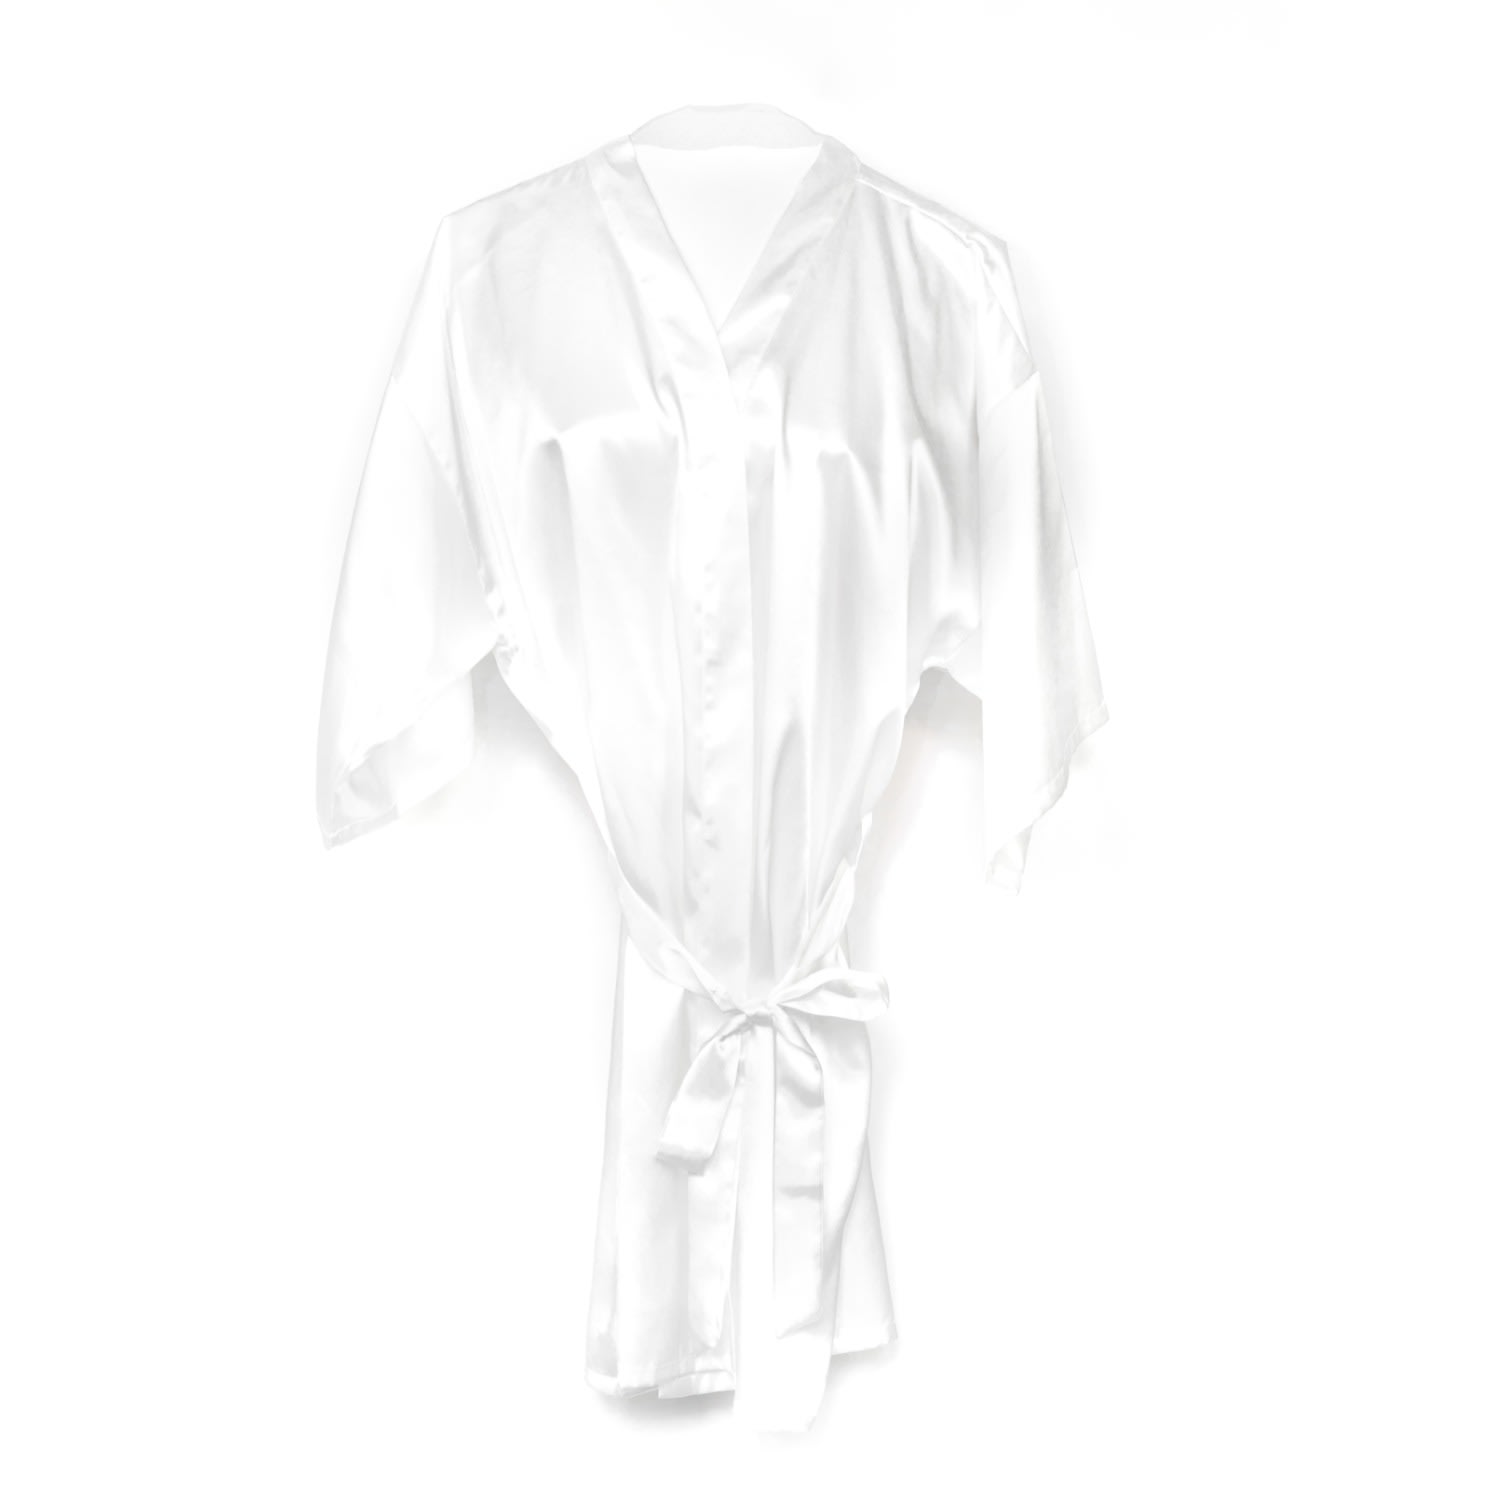 Glamoon Women's White Satin Bridal Kimono Robe Nightwear Gift/ Glitter Letters In Brown